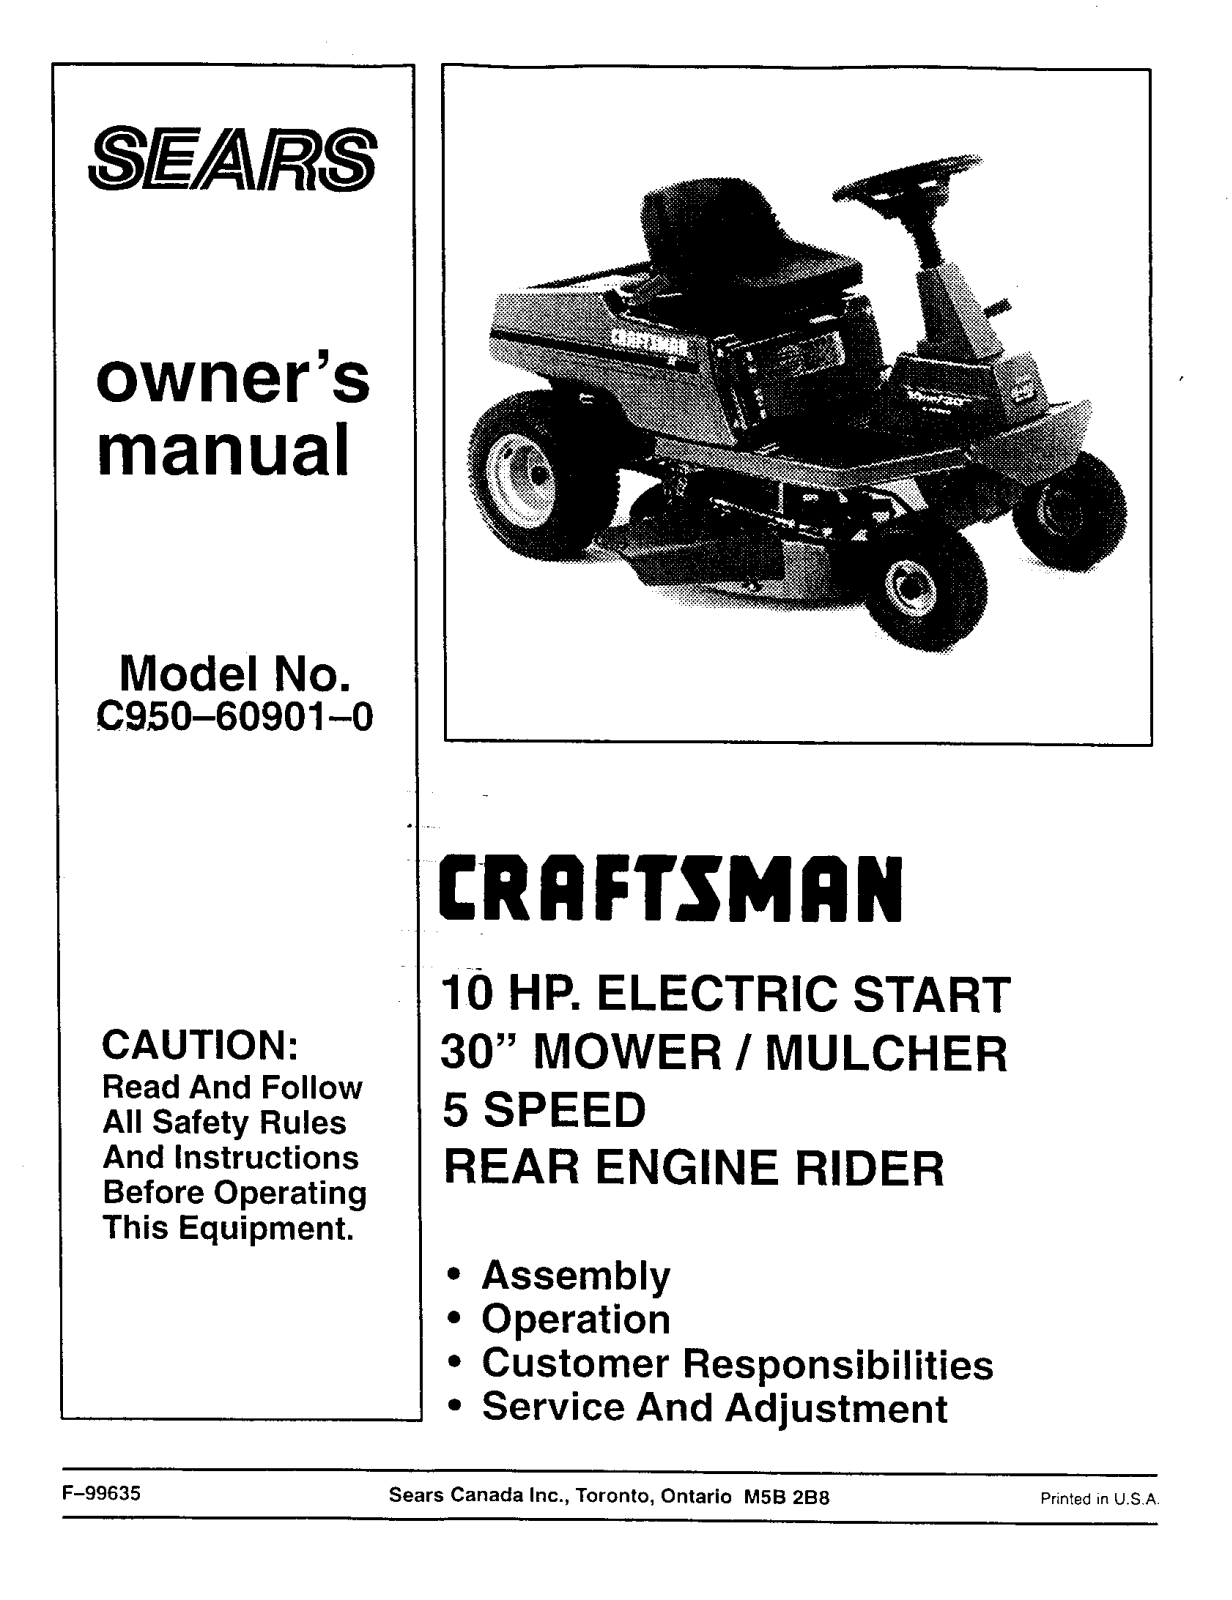 Craftsman C950-60901-0 Owner’s Manual